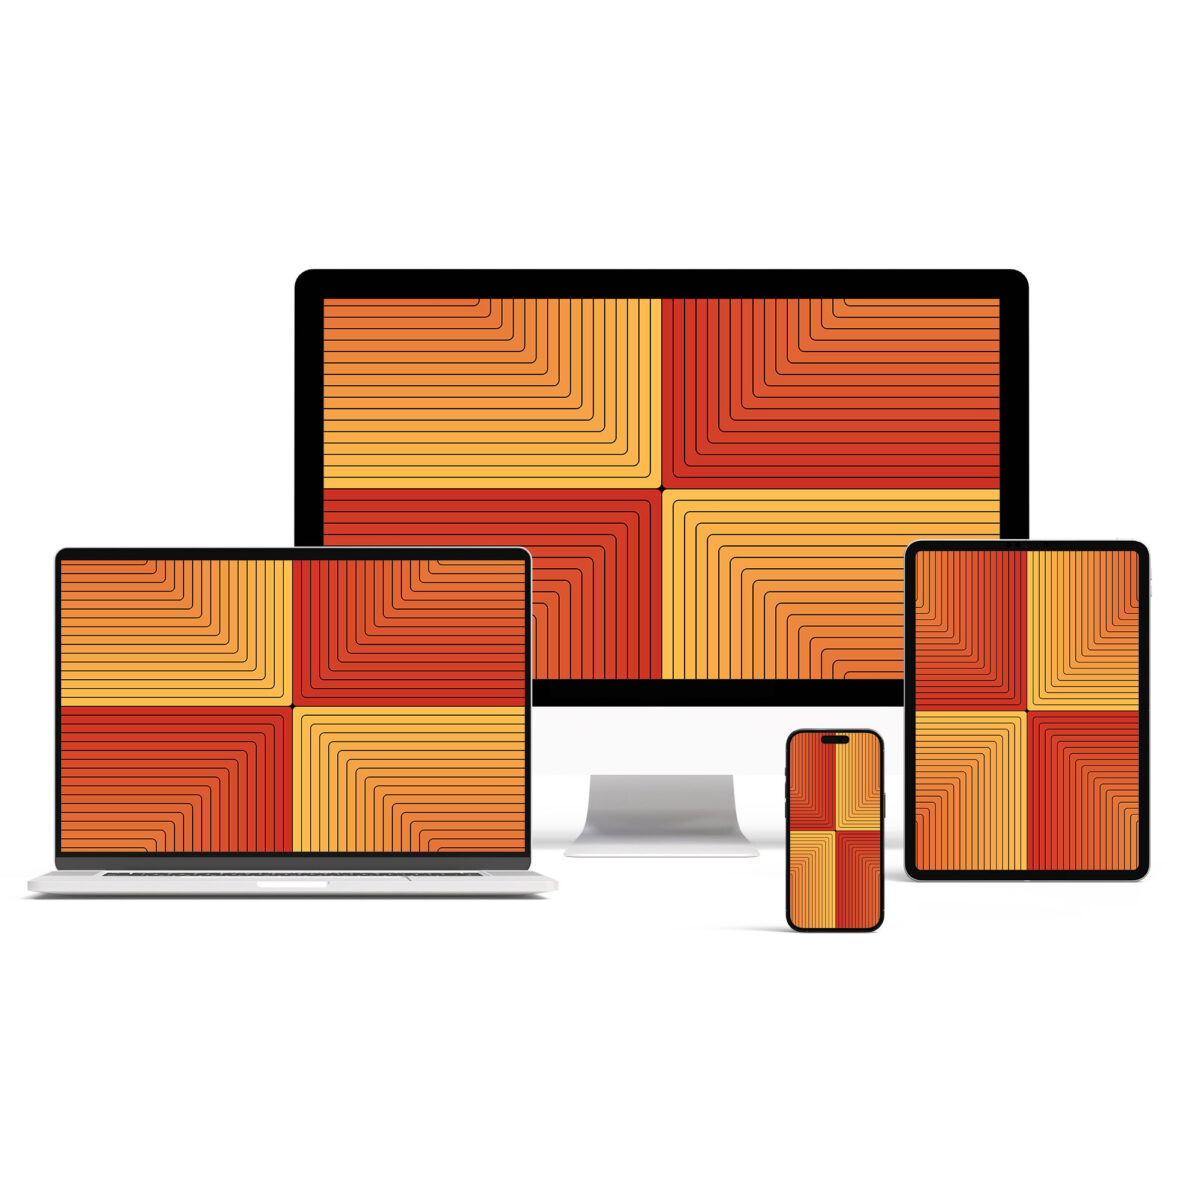 Desktop, laptop, tablet, and mobile phone with Scorcher digital wallpaper backgrounds.